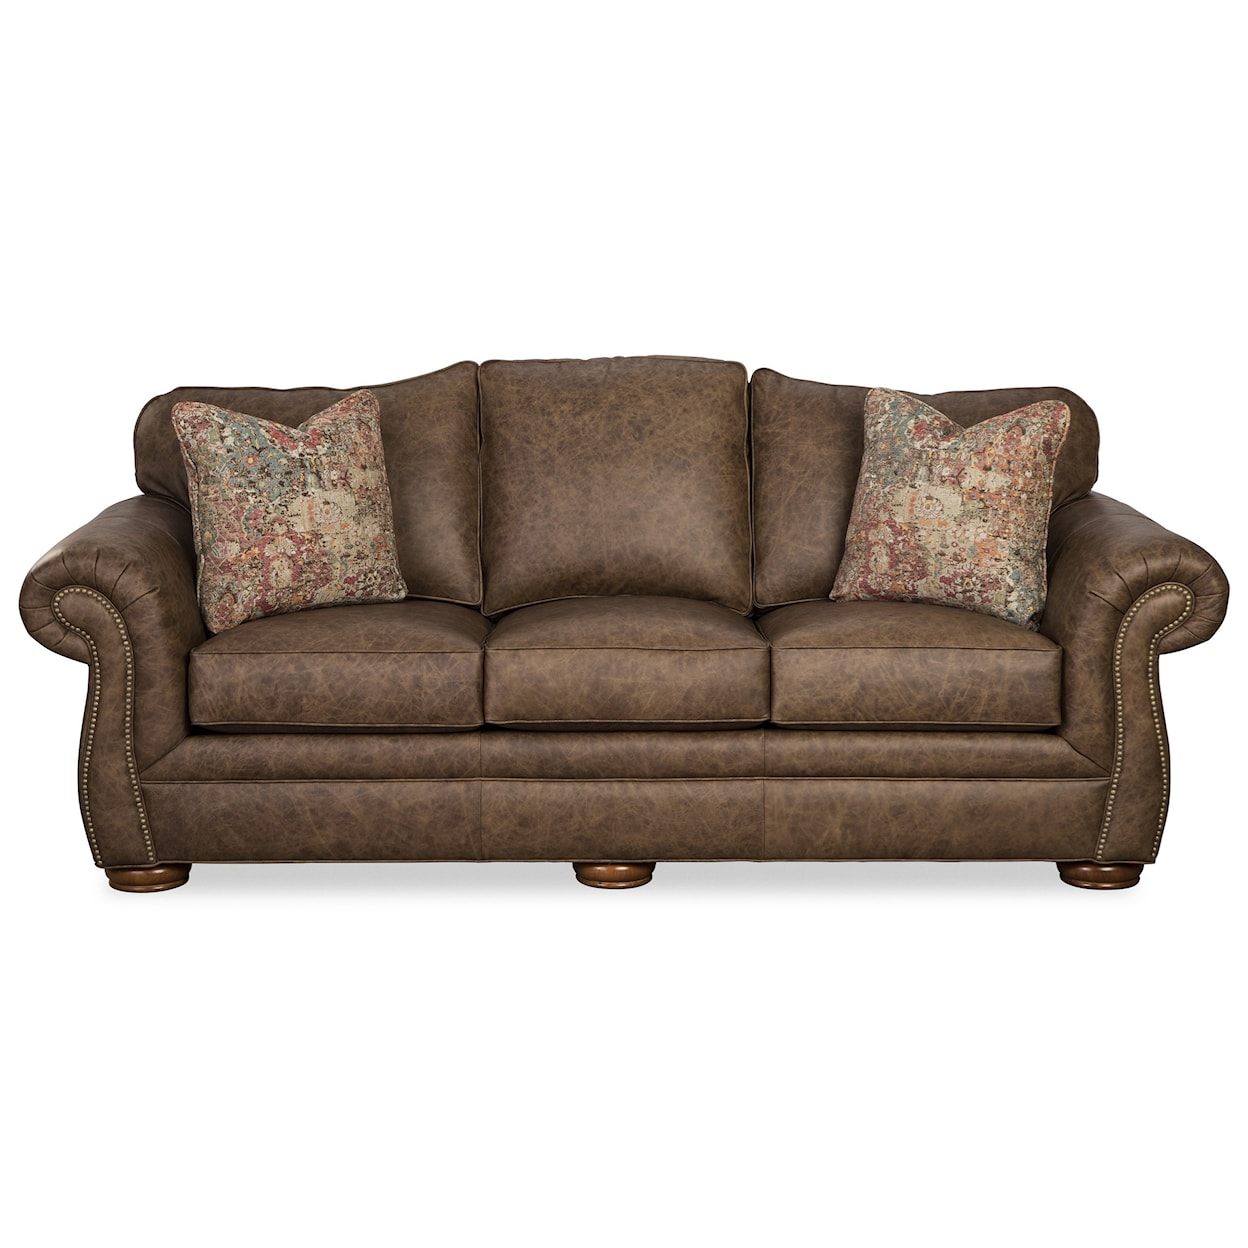 Craftmaster L268550 Sofa w/ Pillows